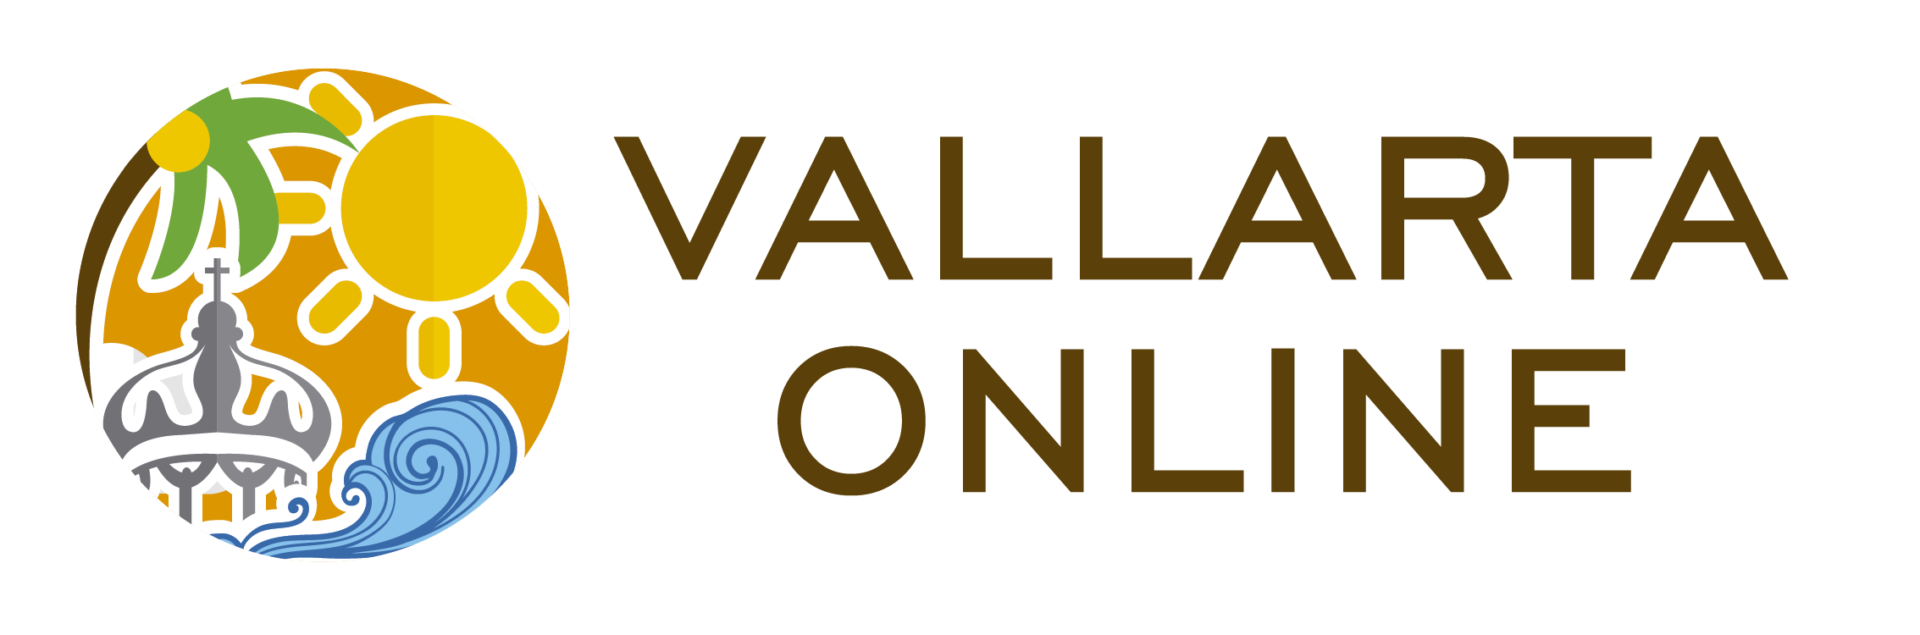 (c) Vallartaonline.com